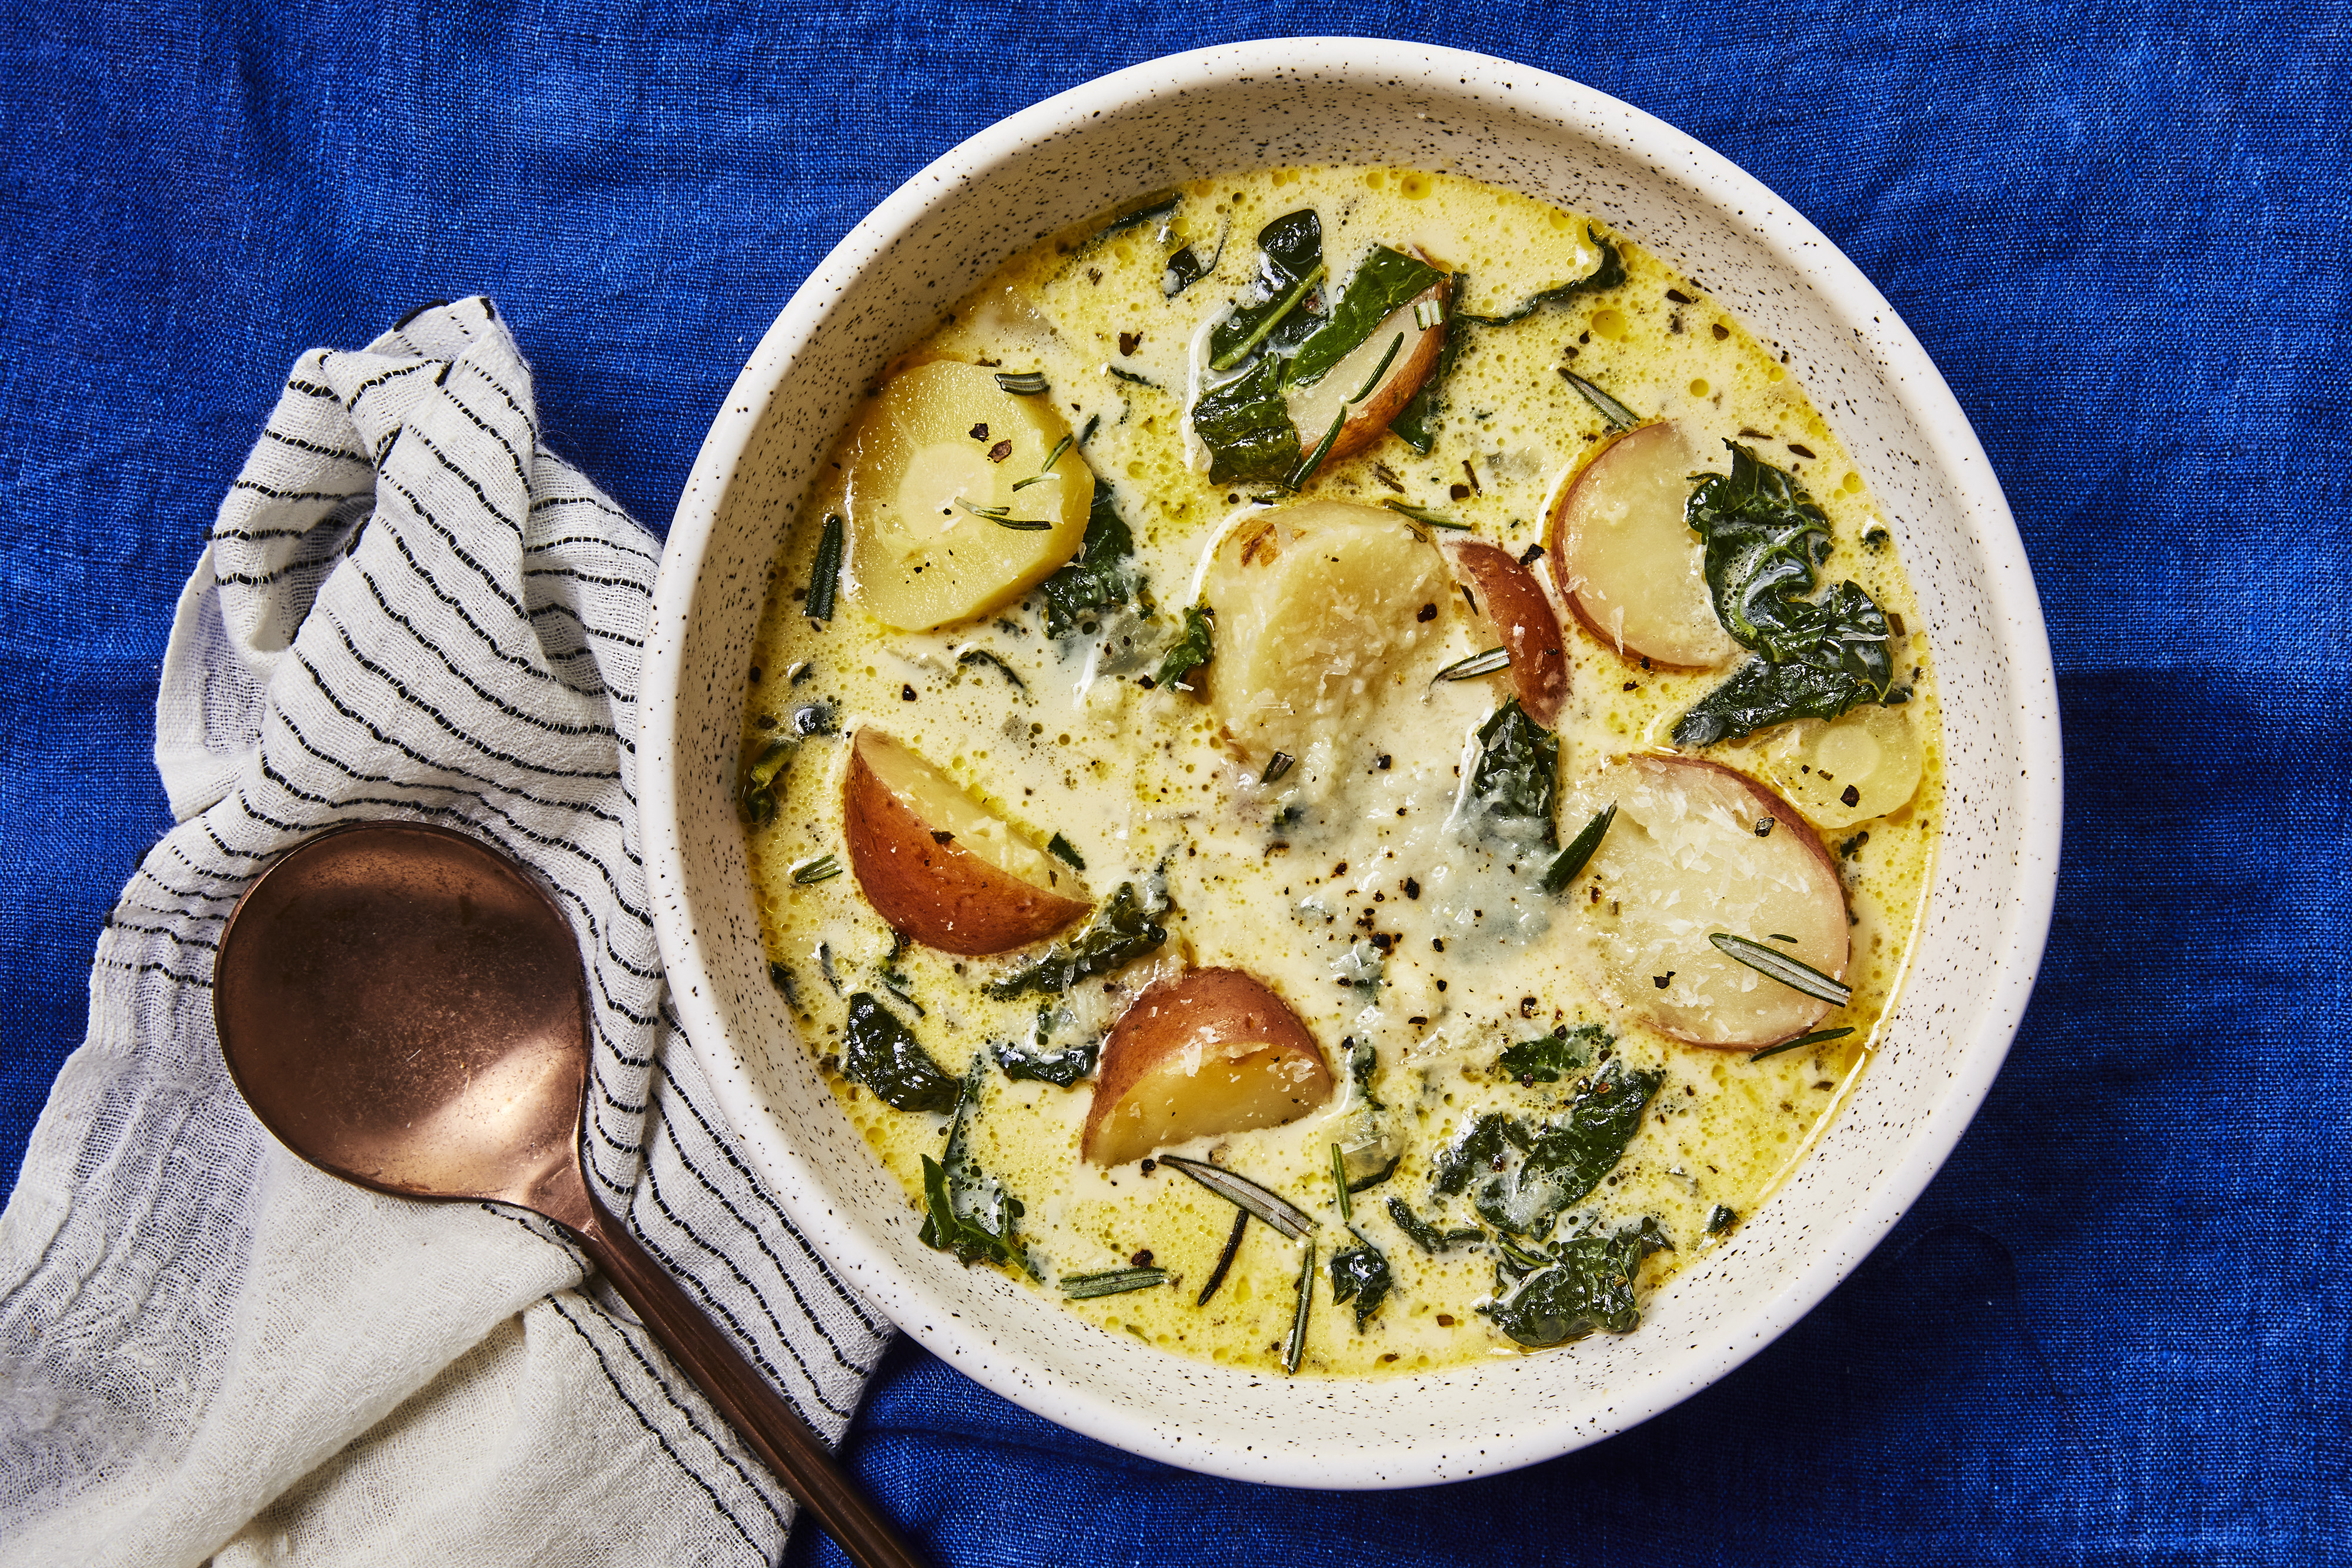 EatingWell: Every soup season needs this vegetarian potato-kale